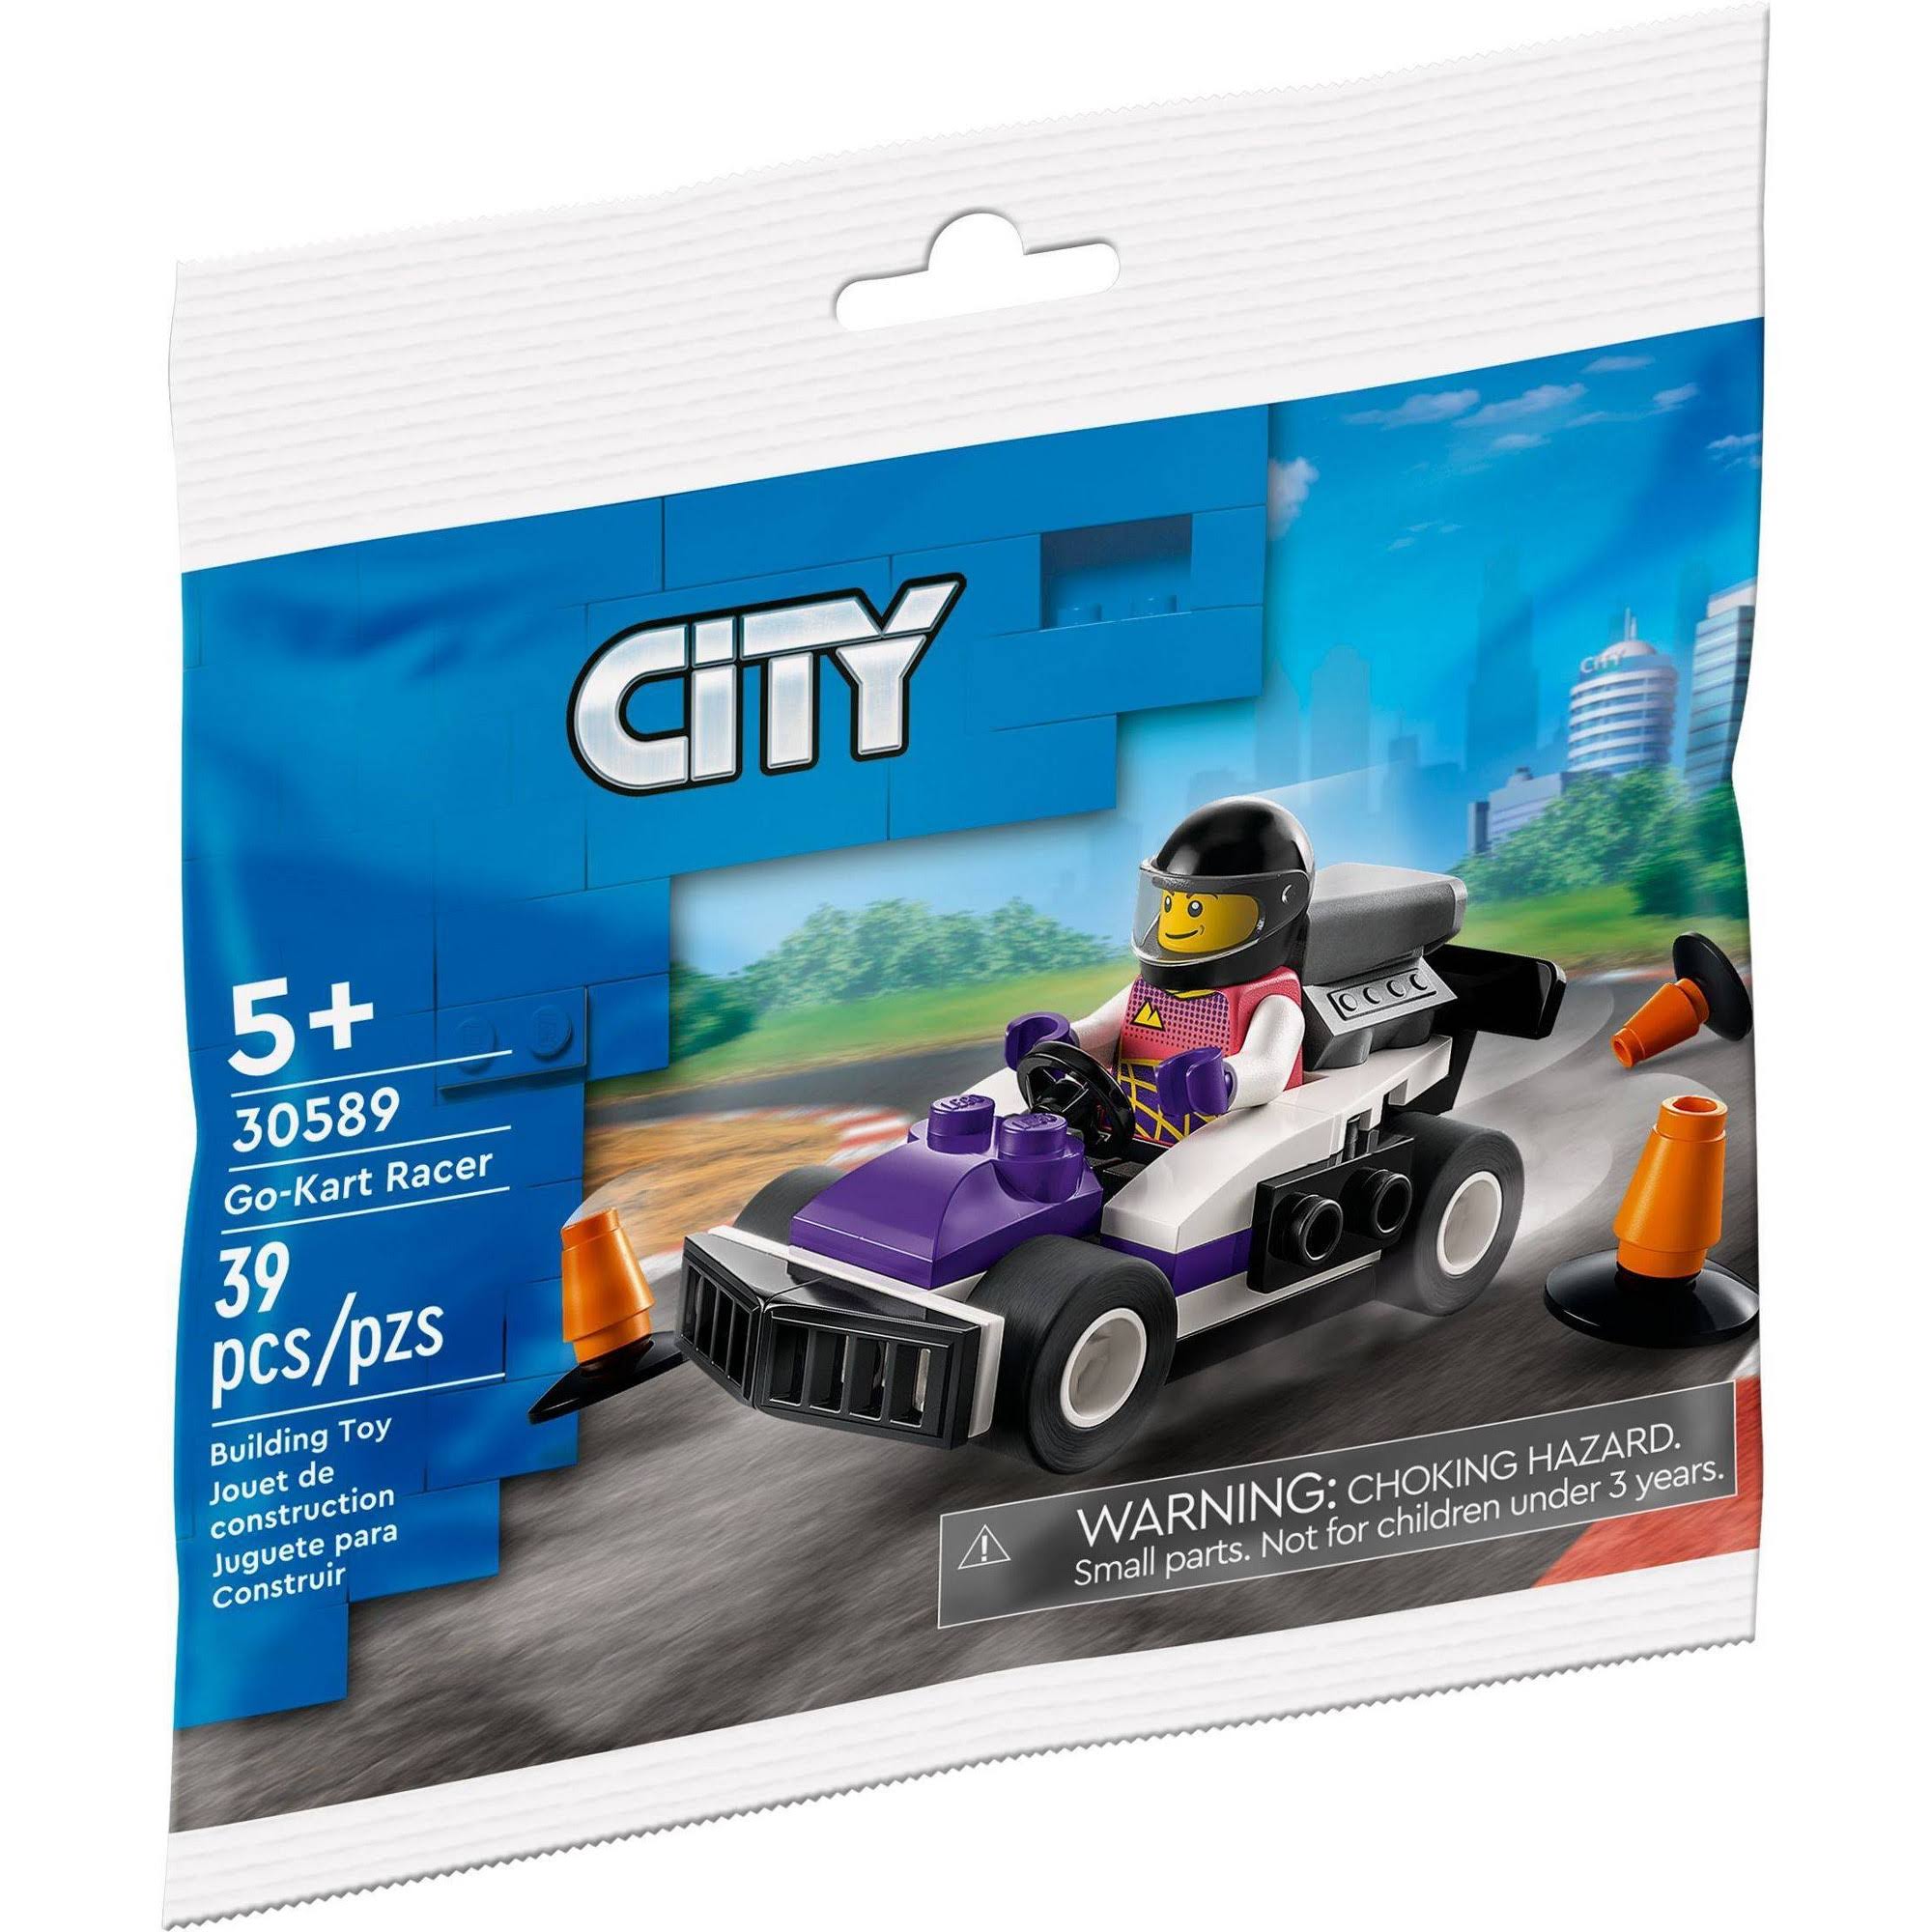 LEGO 30589 Go-Kart Racer polybag